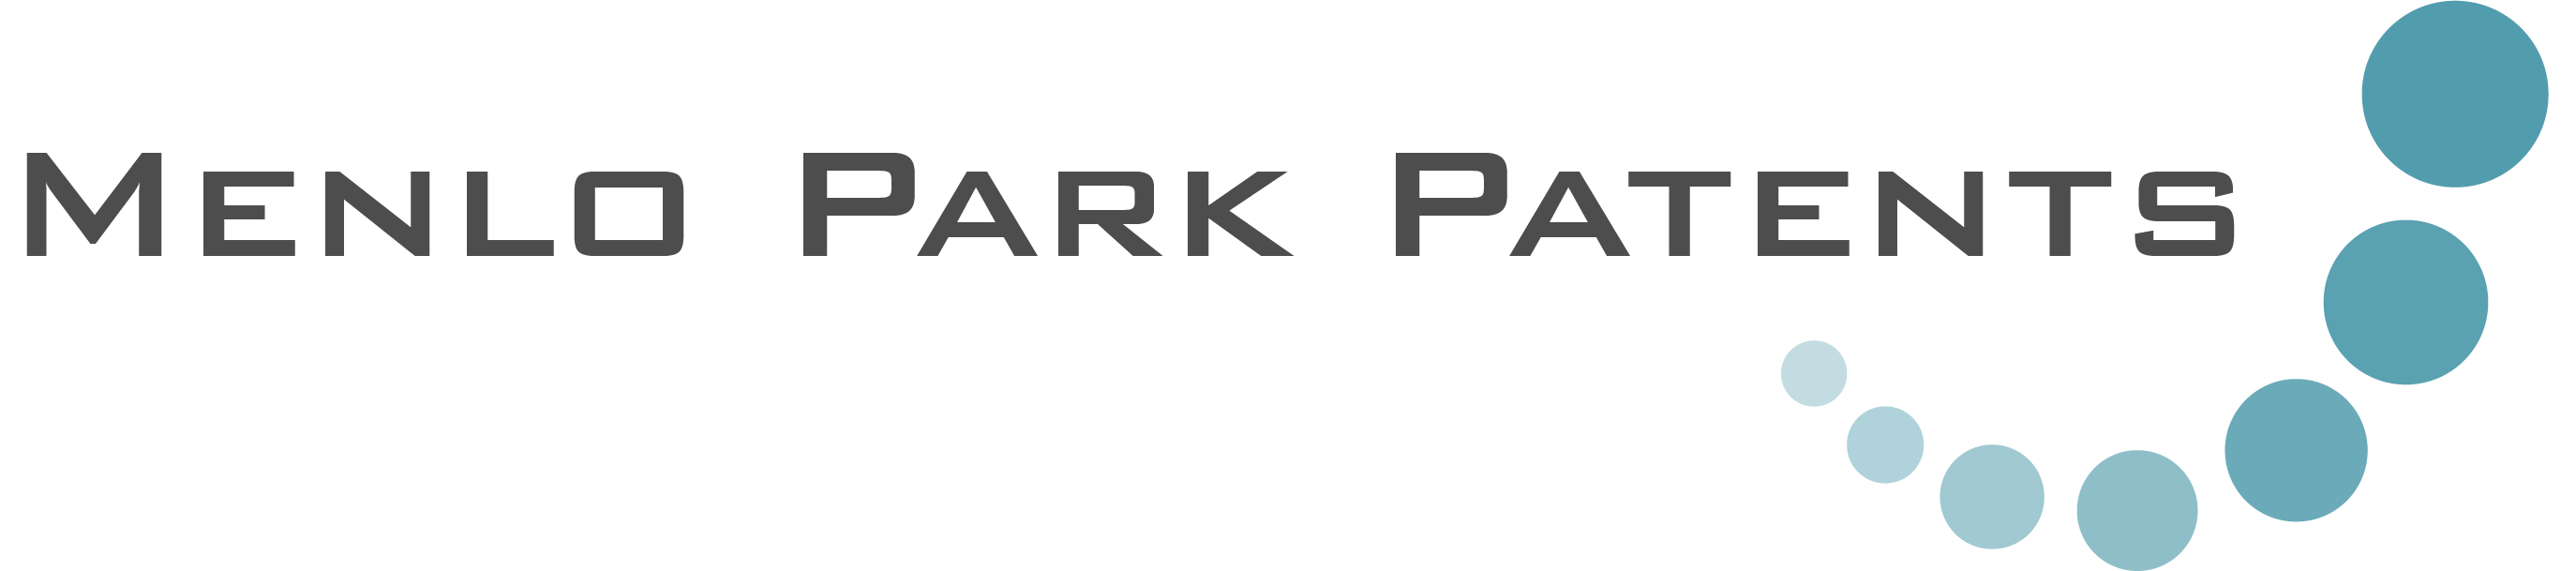 menloparkpatents Logo